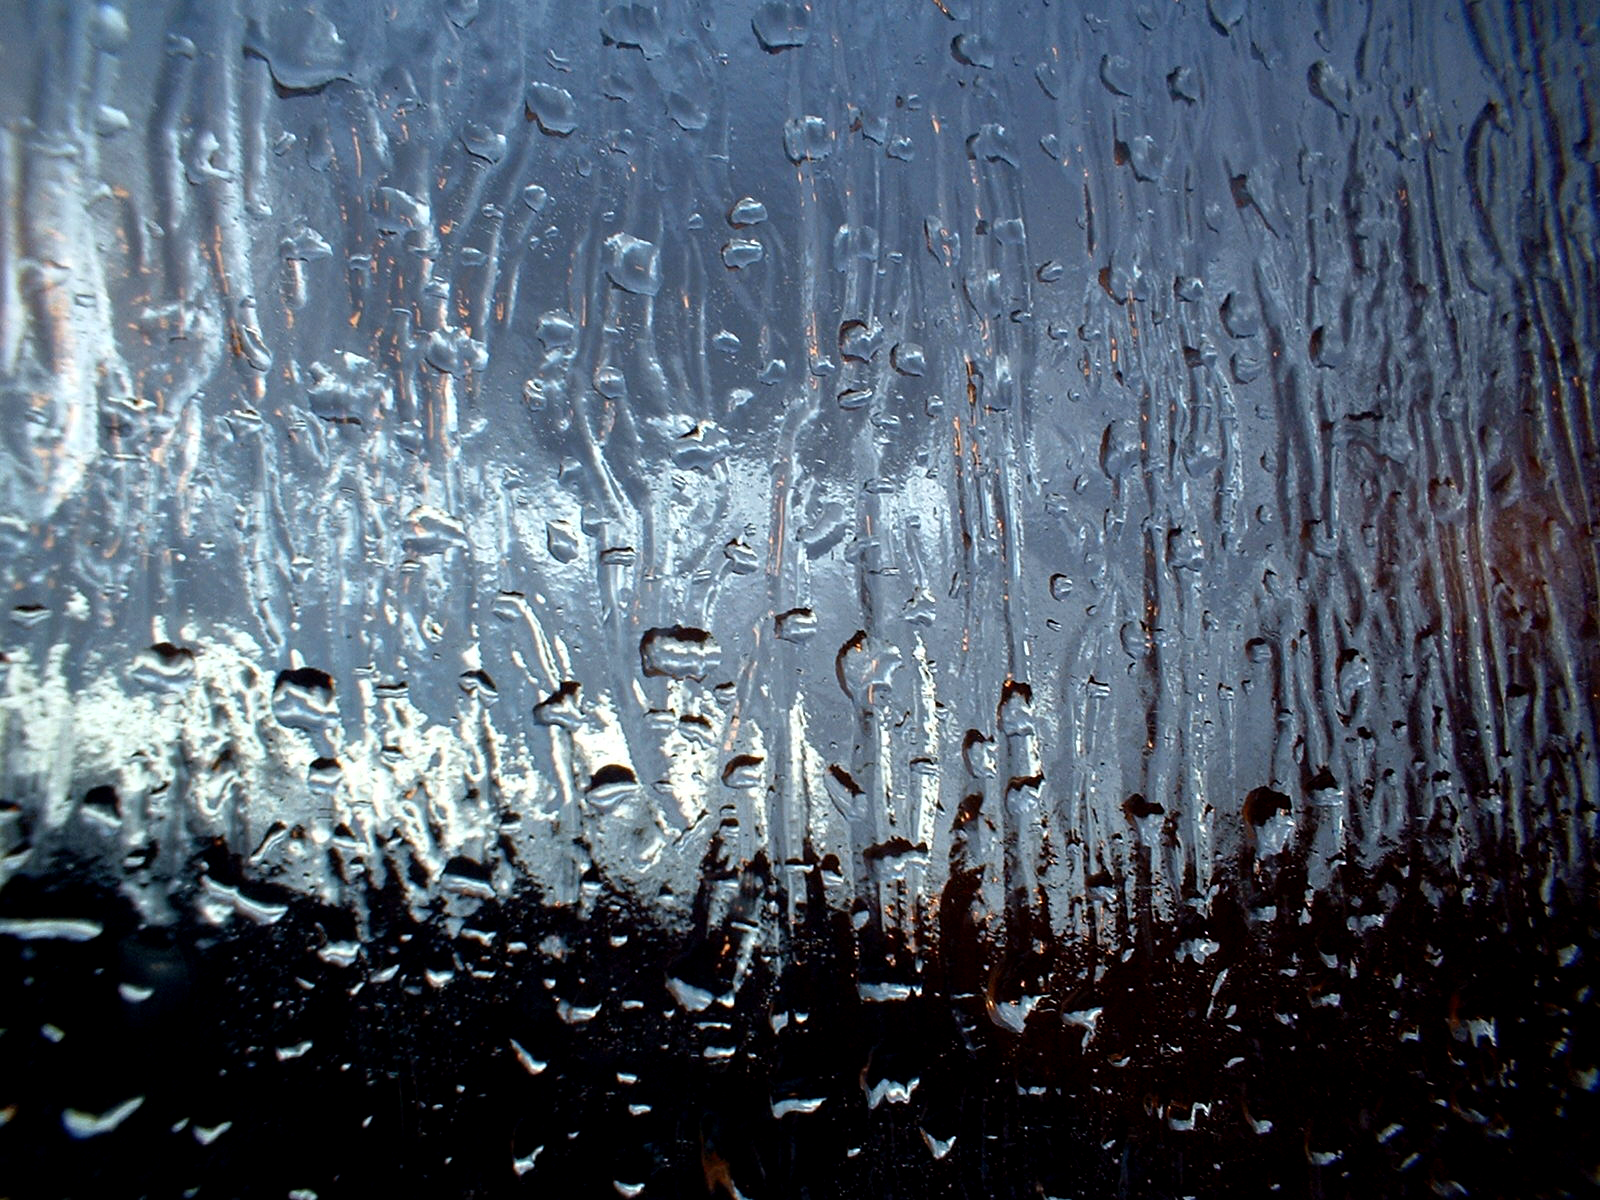 Its_Raining_Outside_by_Blackbolt.jpg